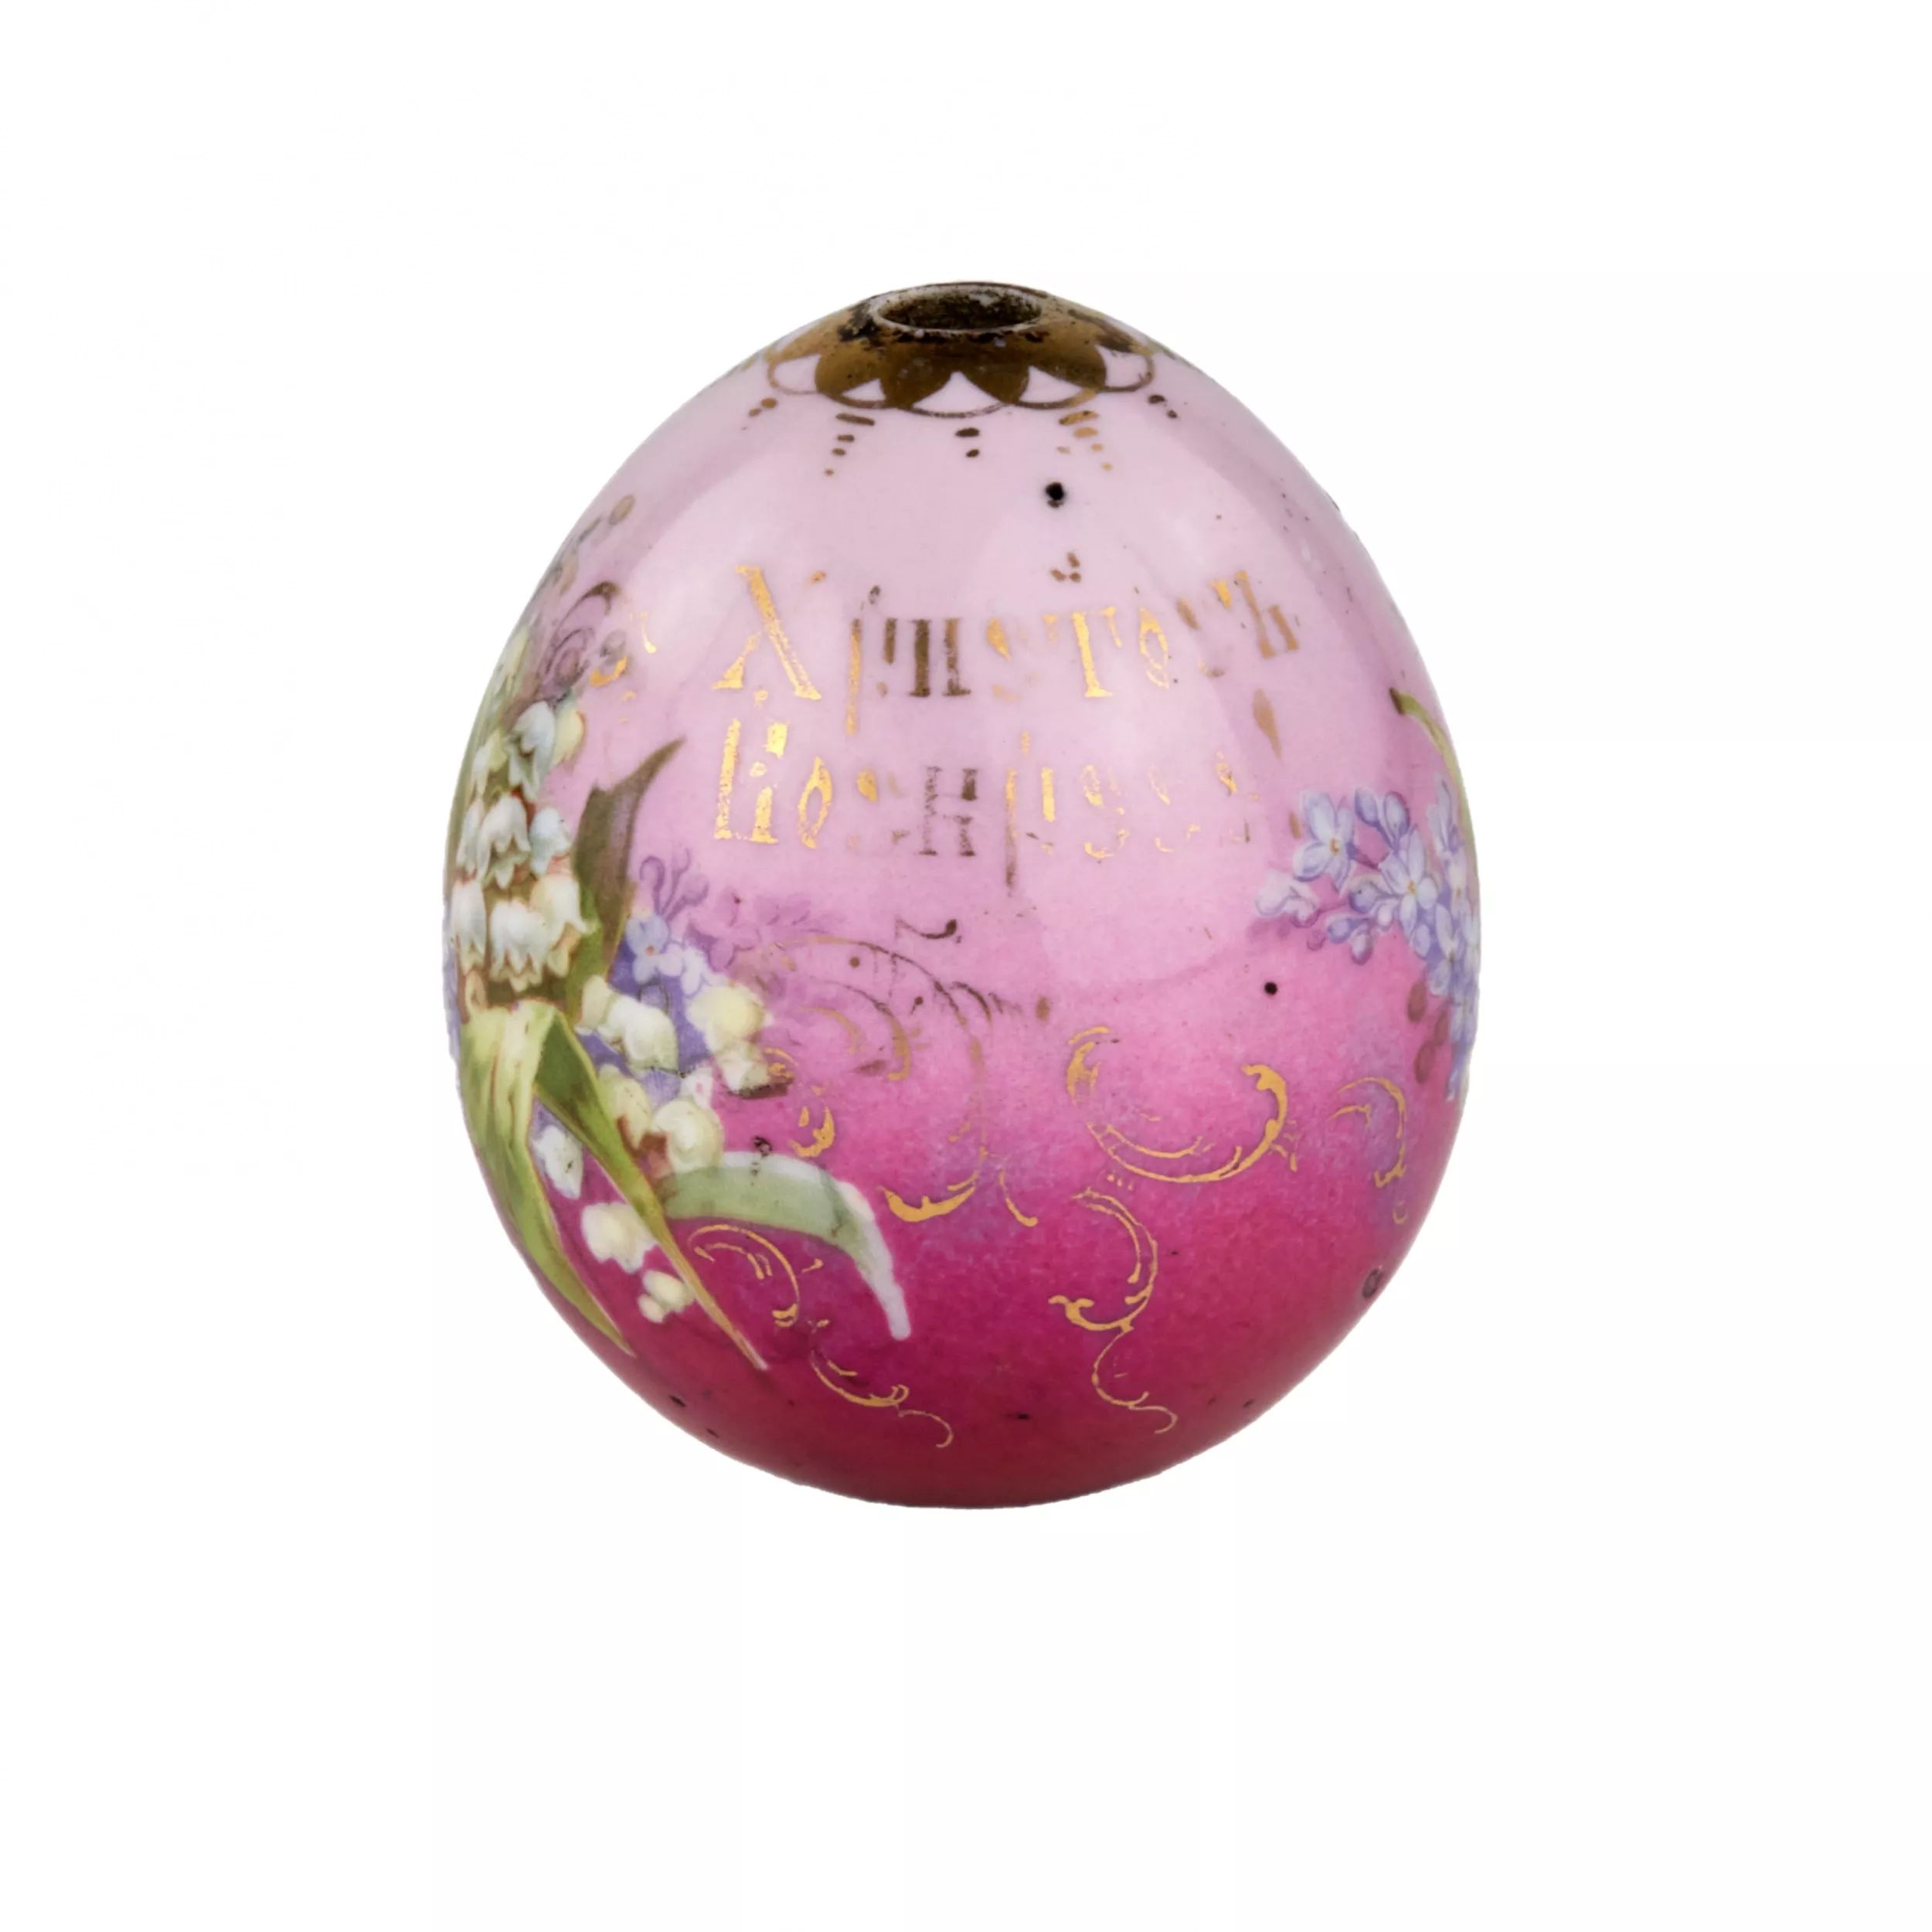 Painted-porcelain-Easter-egg-